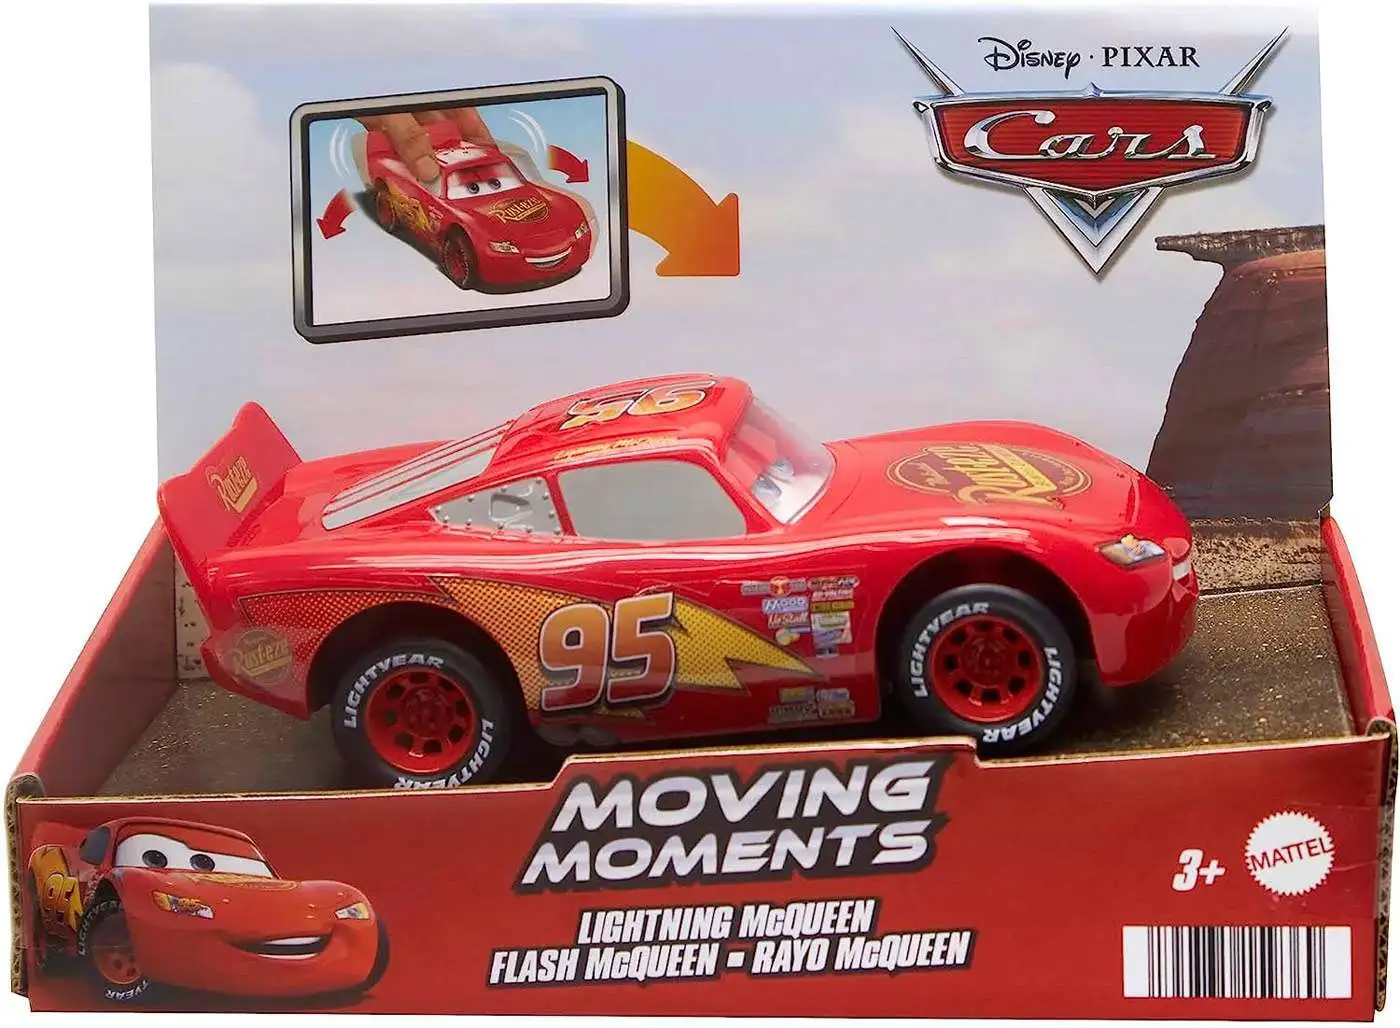 Disney / Pixar Cars Cars 3 Moving Moments Lightning McQueen Vehicle